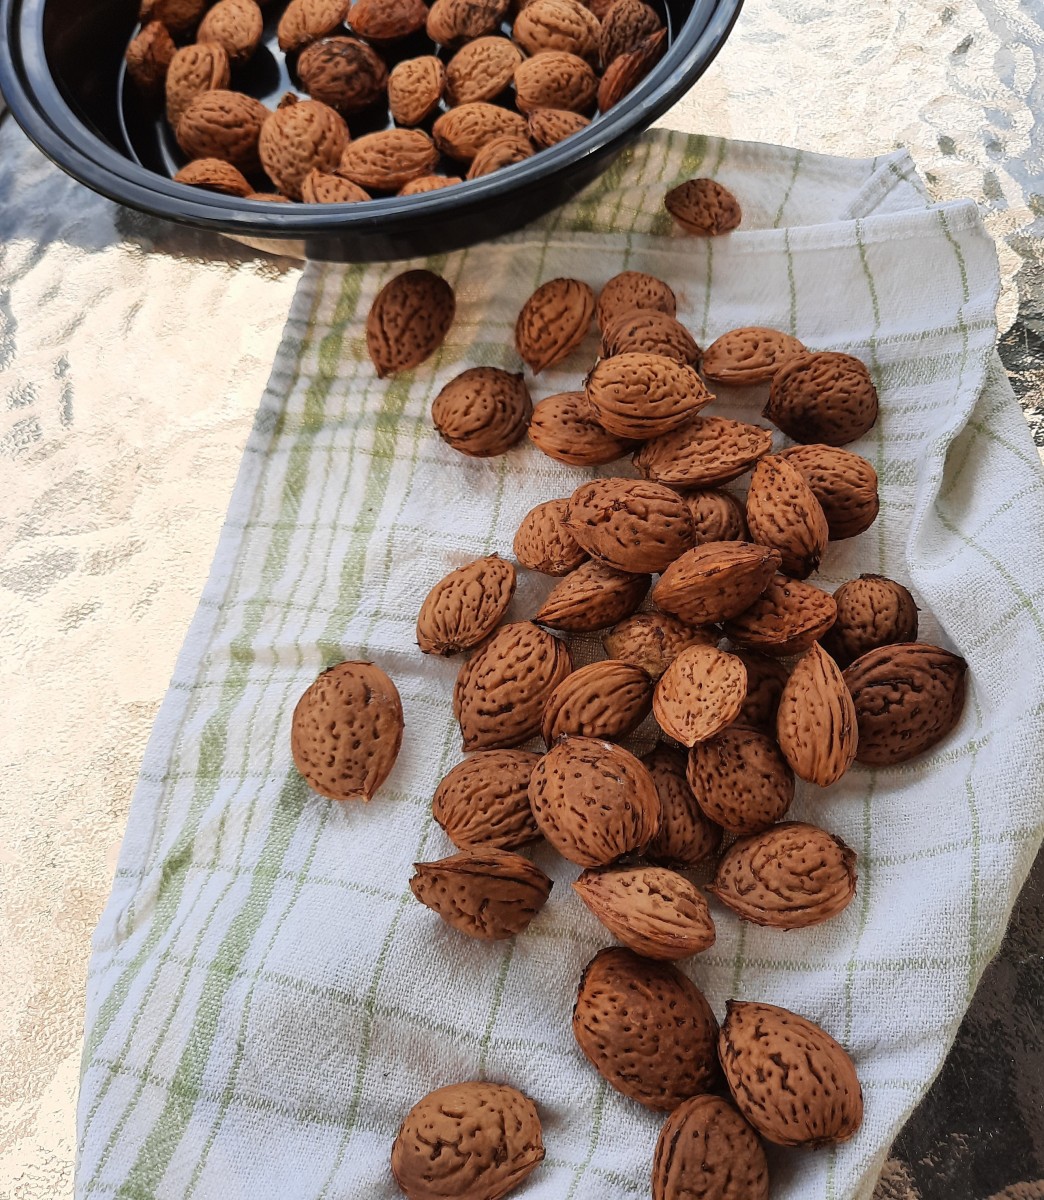 How to Harvest Almonds in Pennsylvania